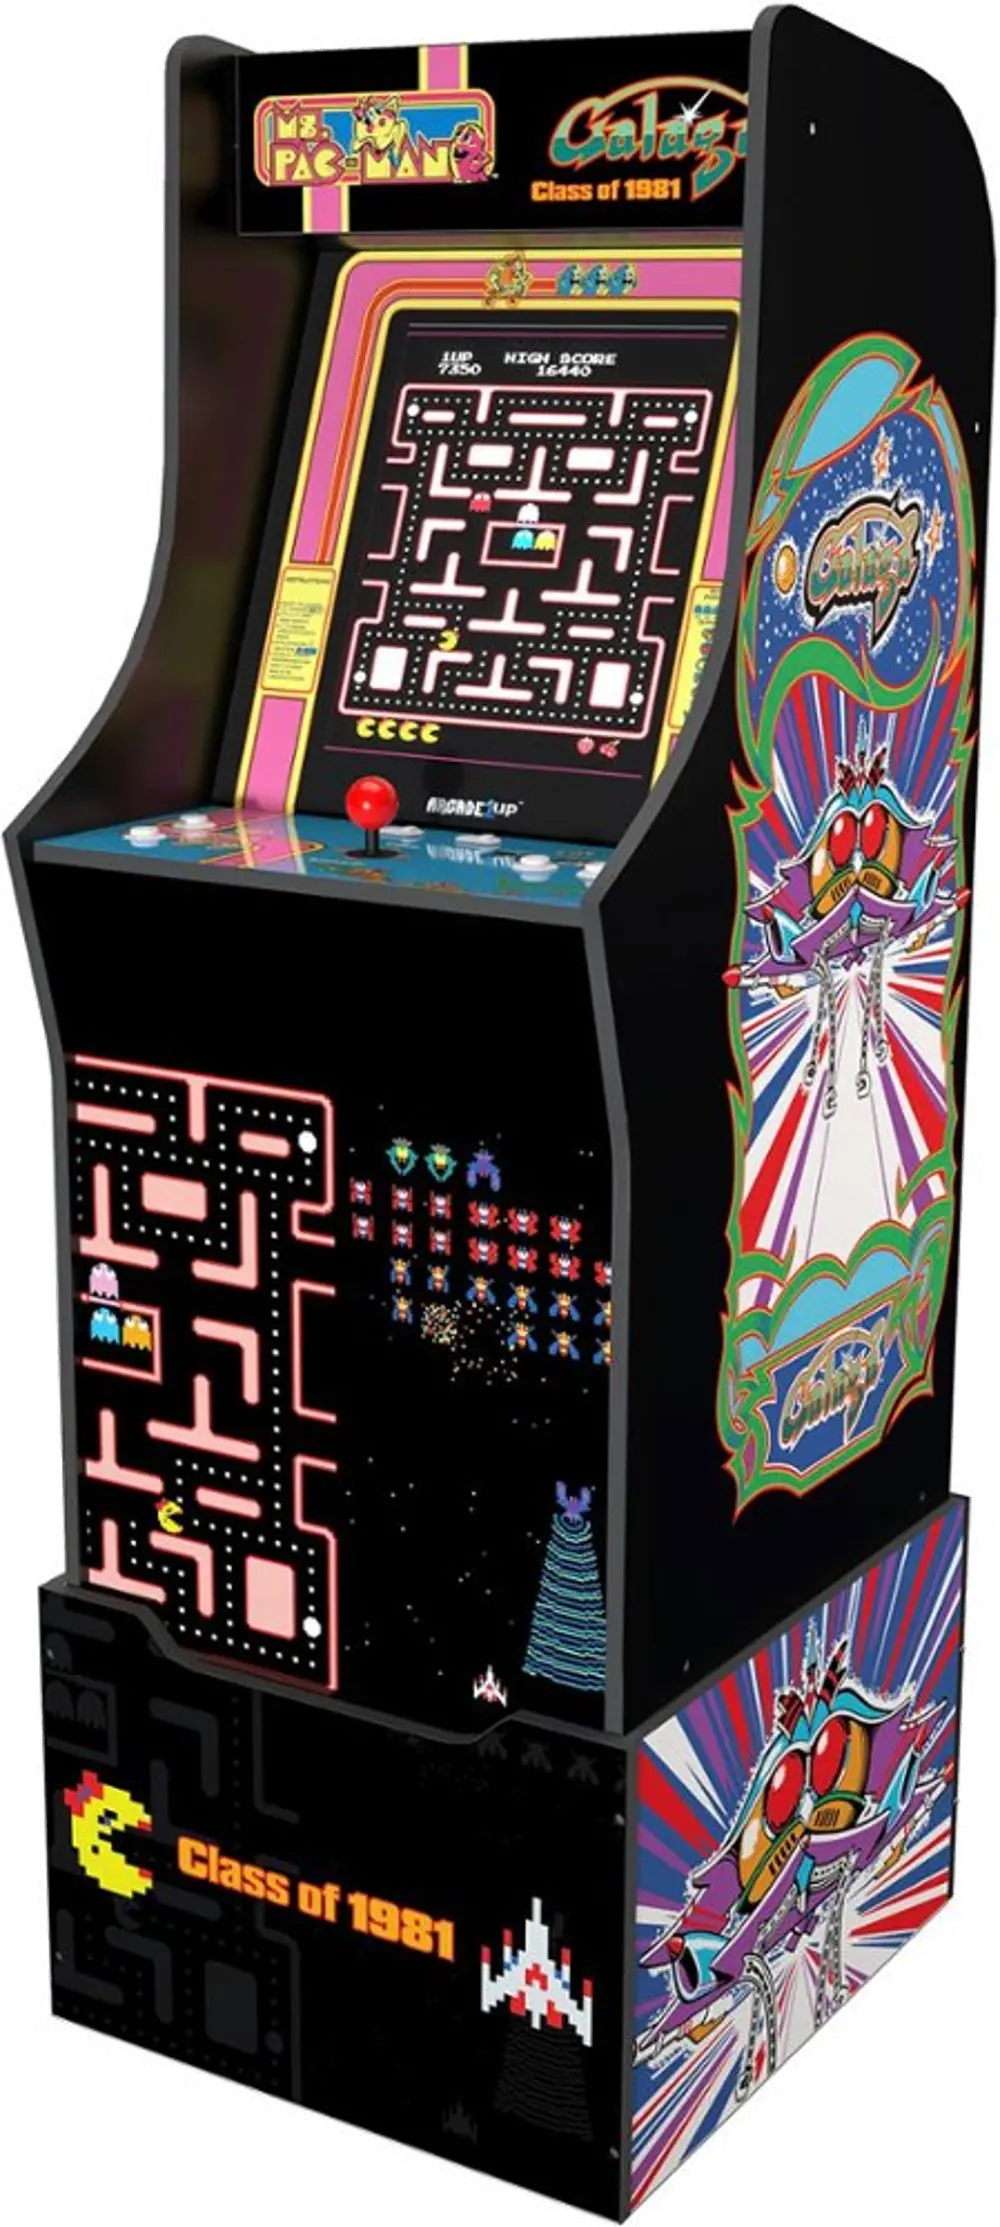 UPRIGHT/MSPAC_GALAGA Arcade 1Up Ms. Pacman & Galaga 1981 Edition 40th Anniversary Arcade-1